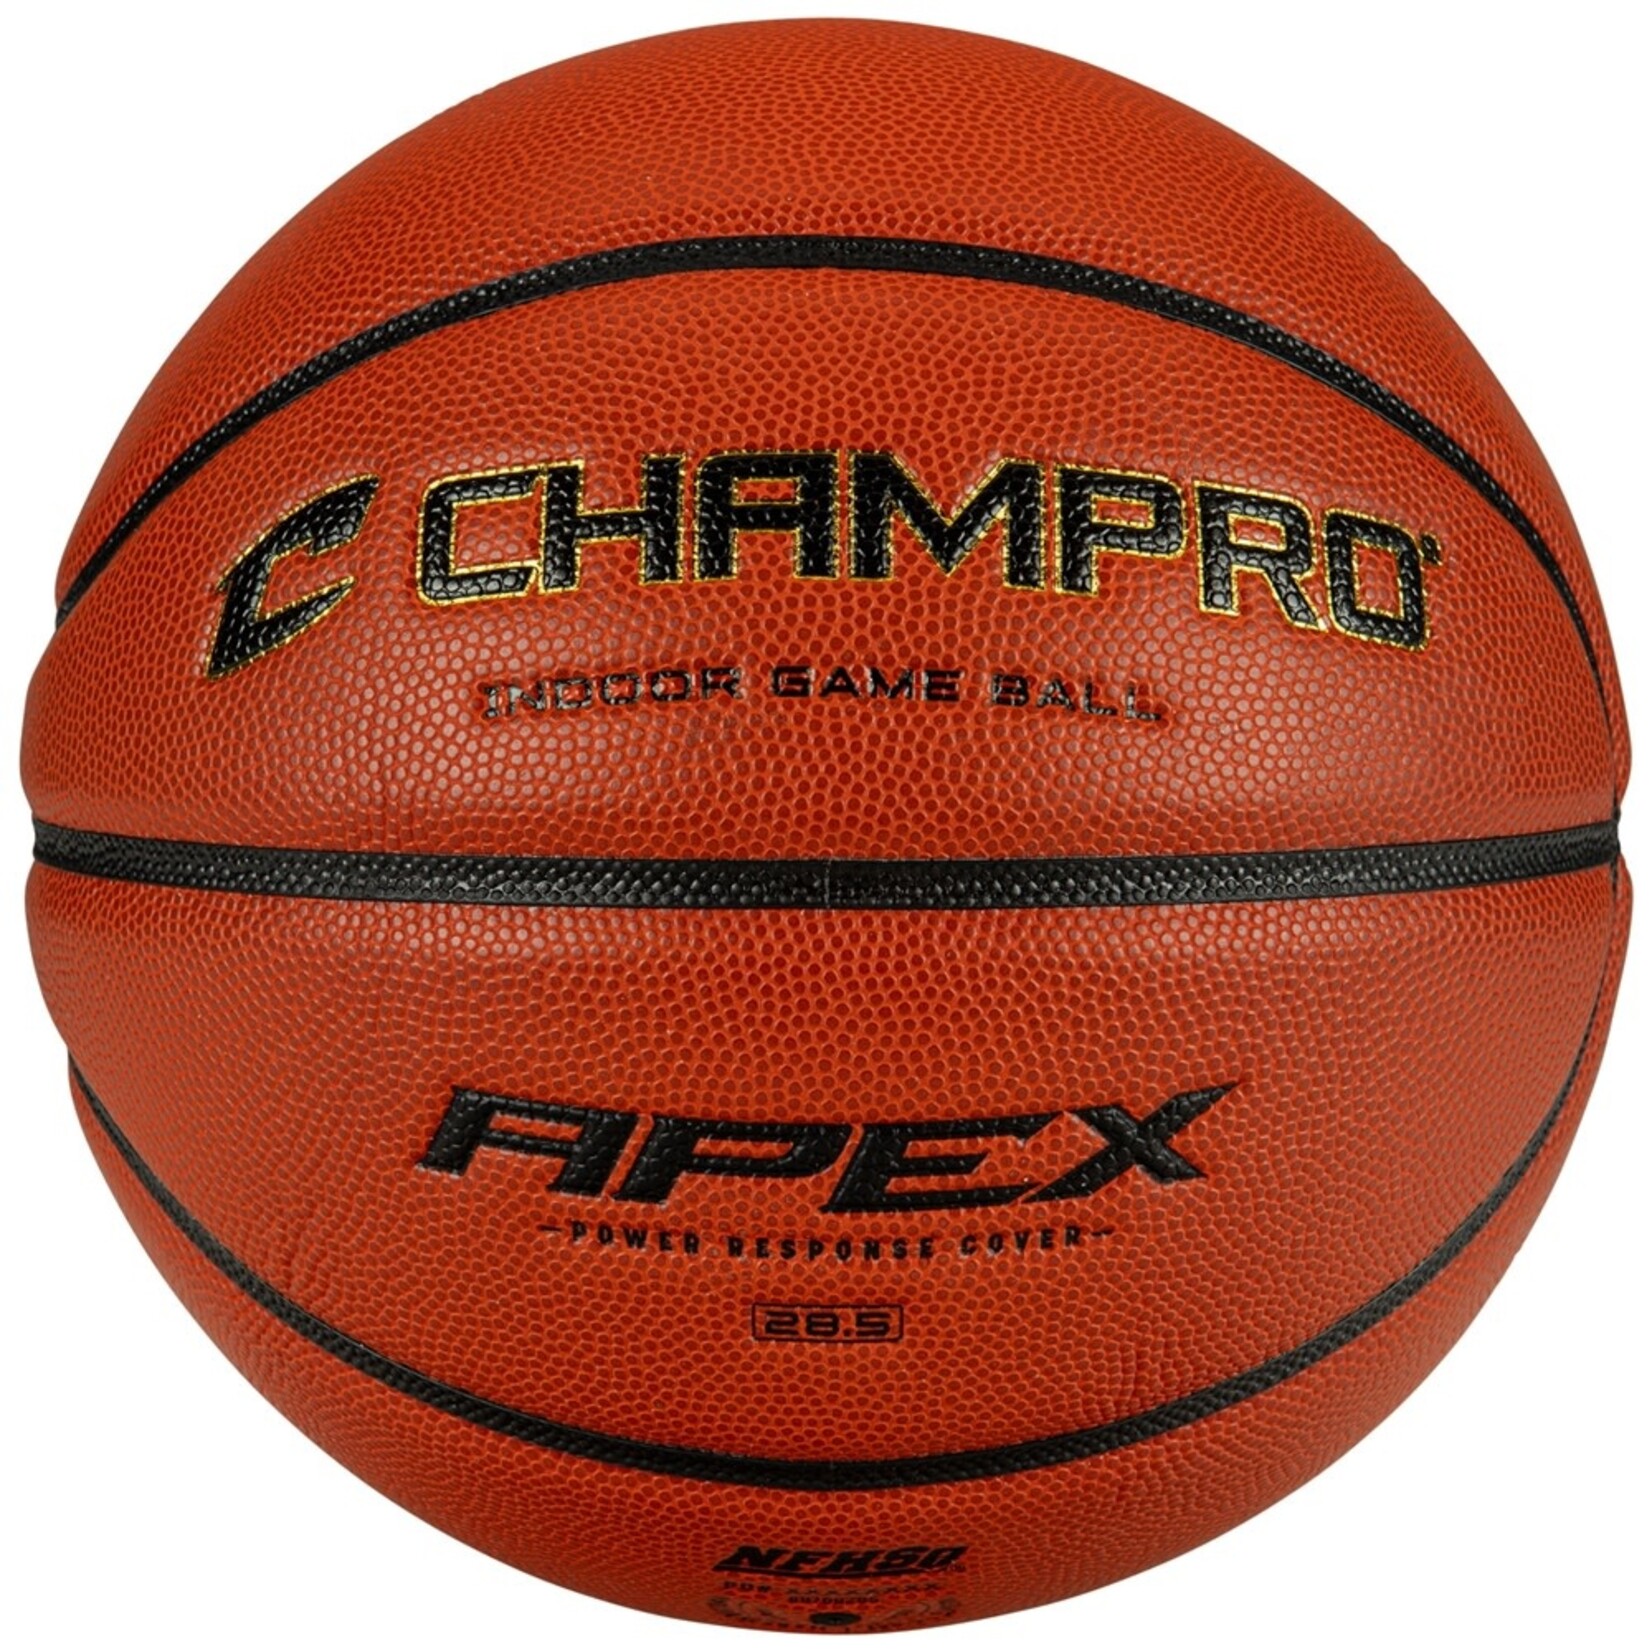 Champro Apex Basketball